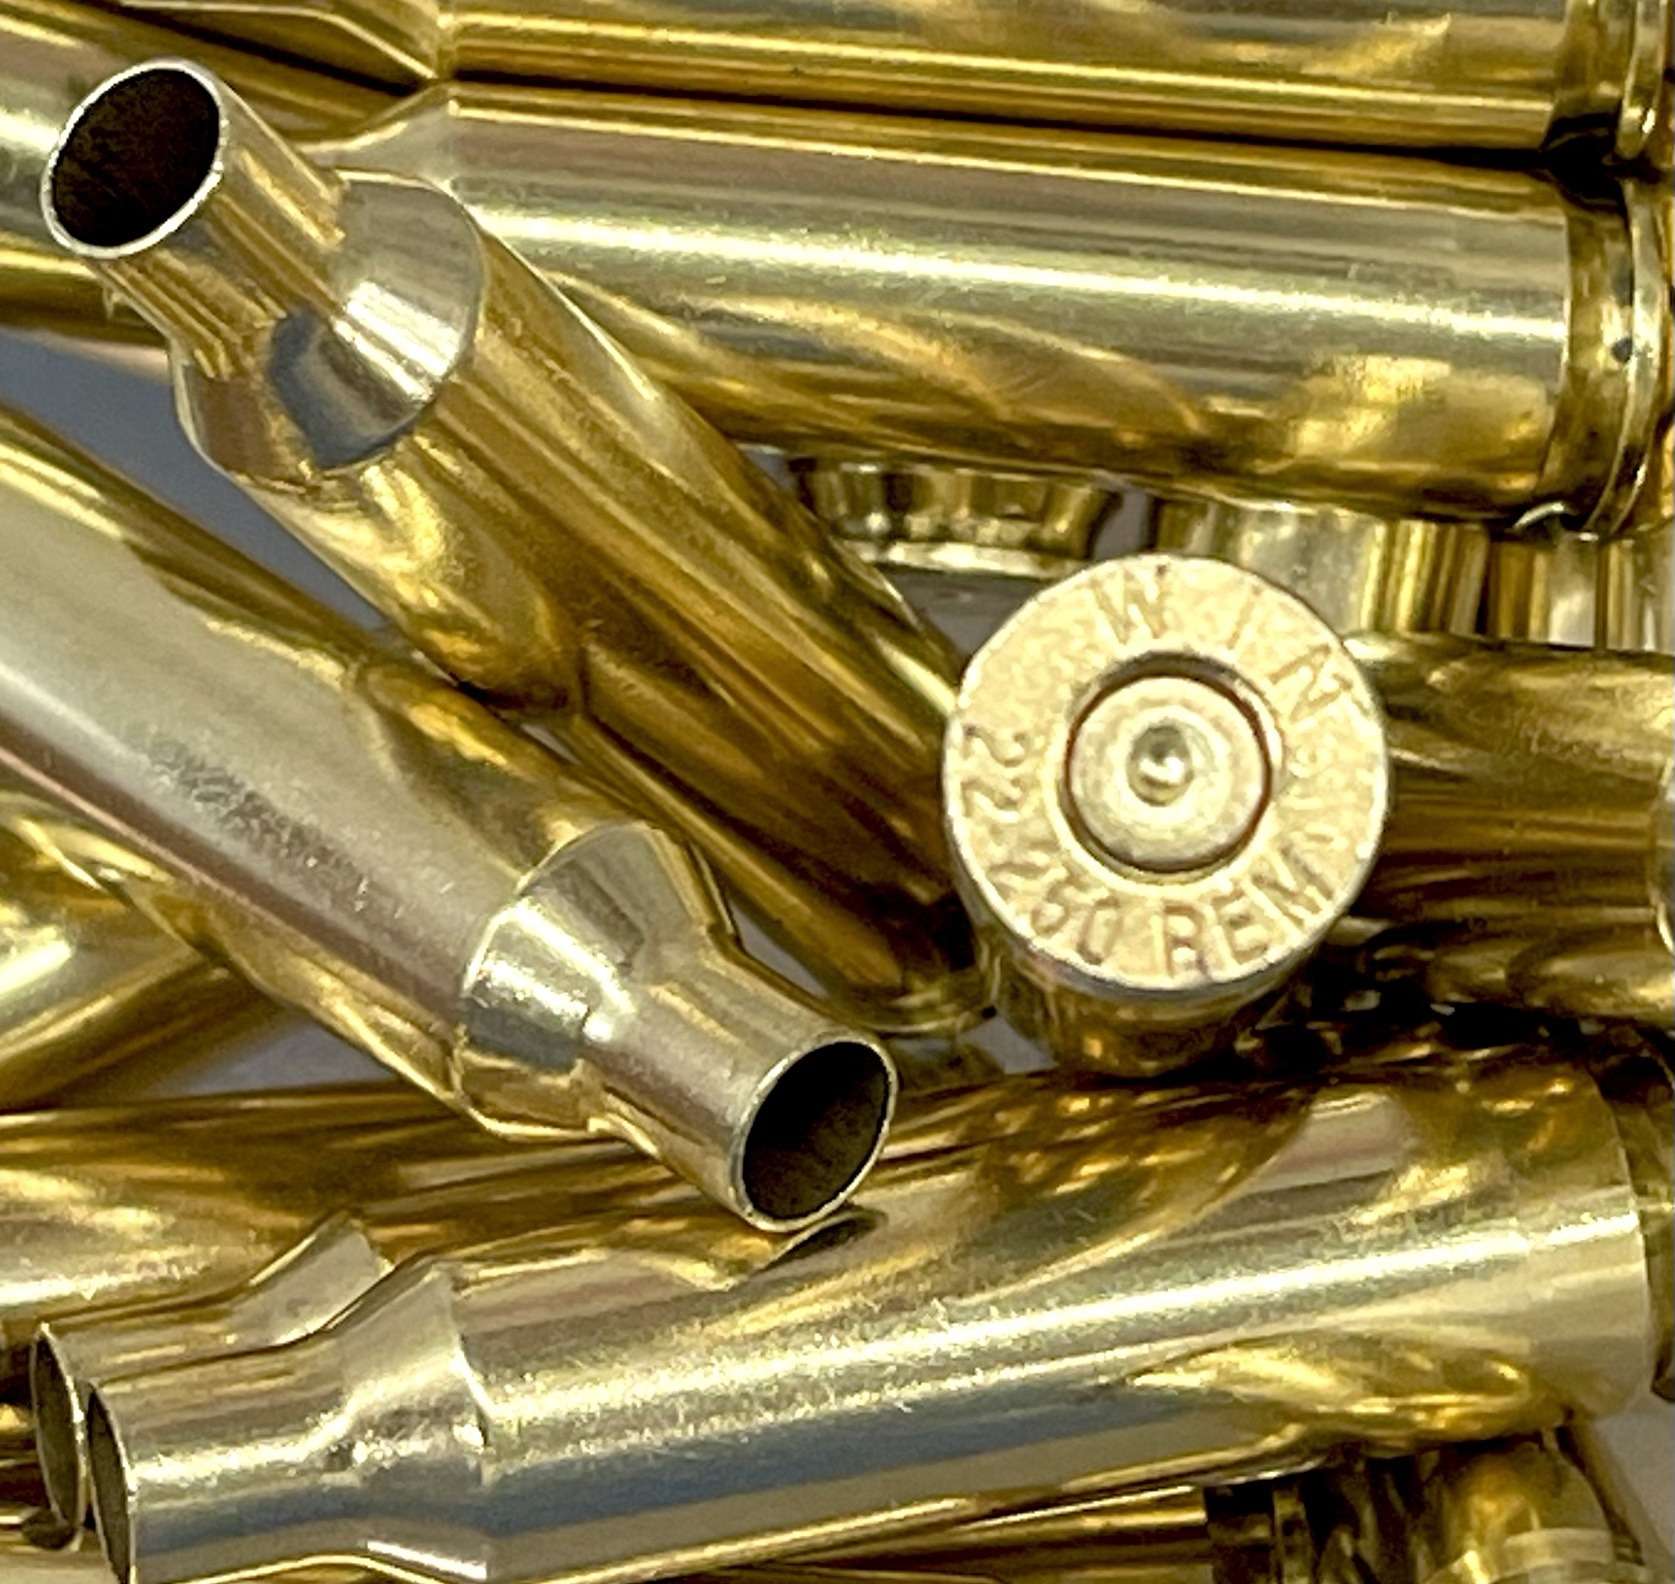 260 Remington Once Fired Reloading Brass - Blue Ridge Brass